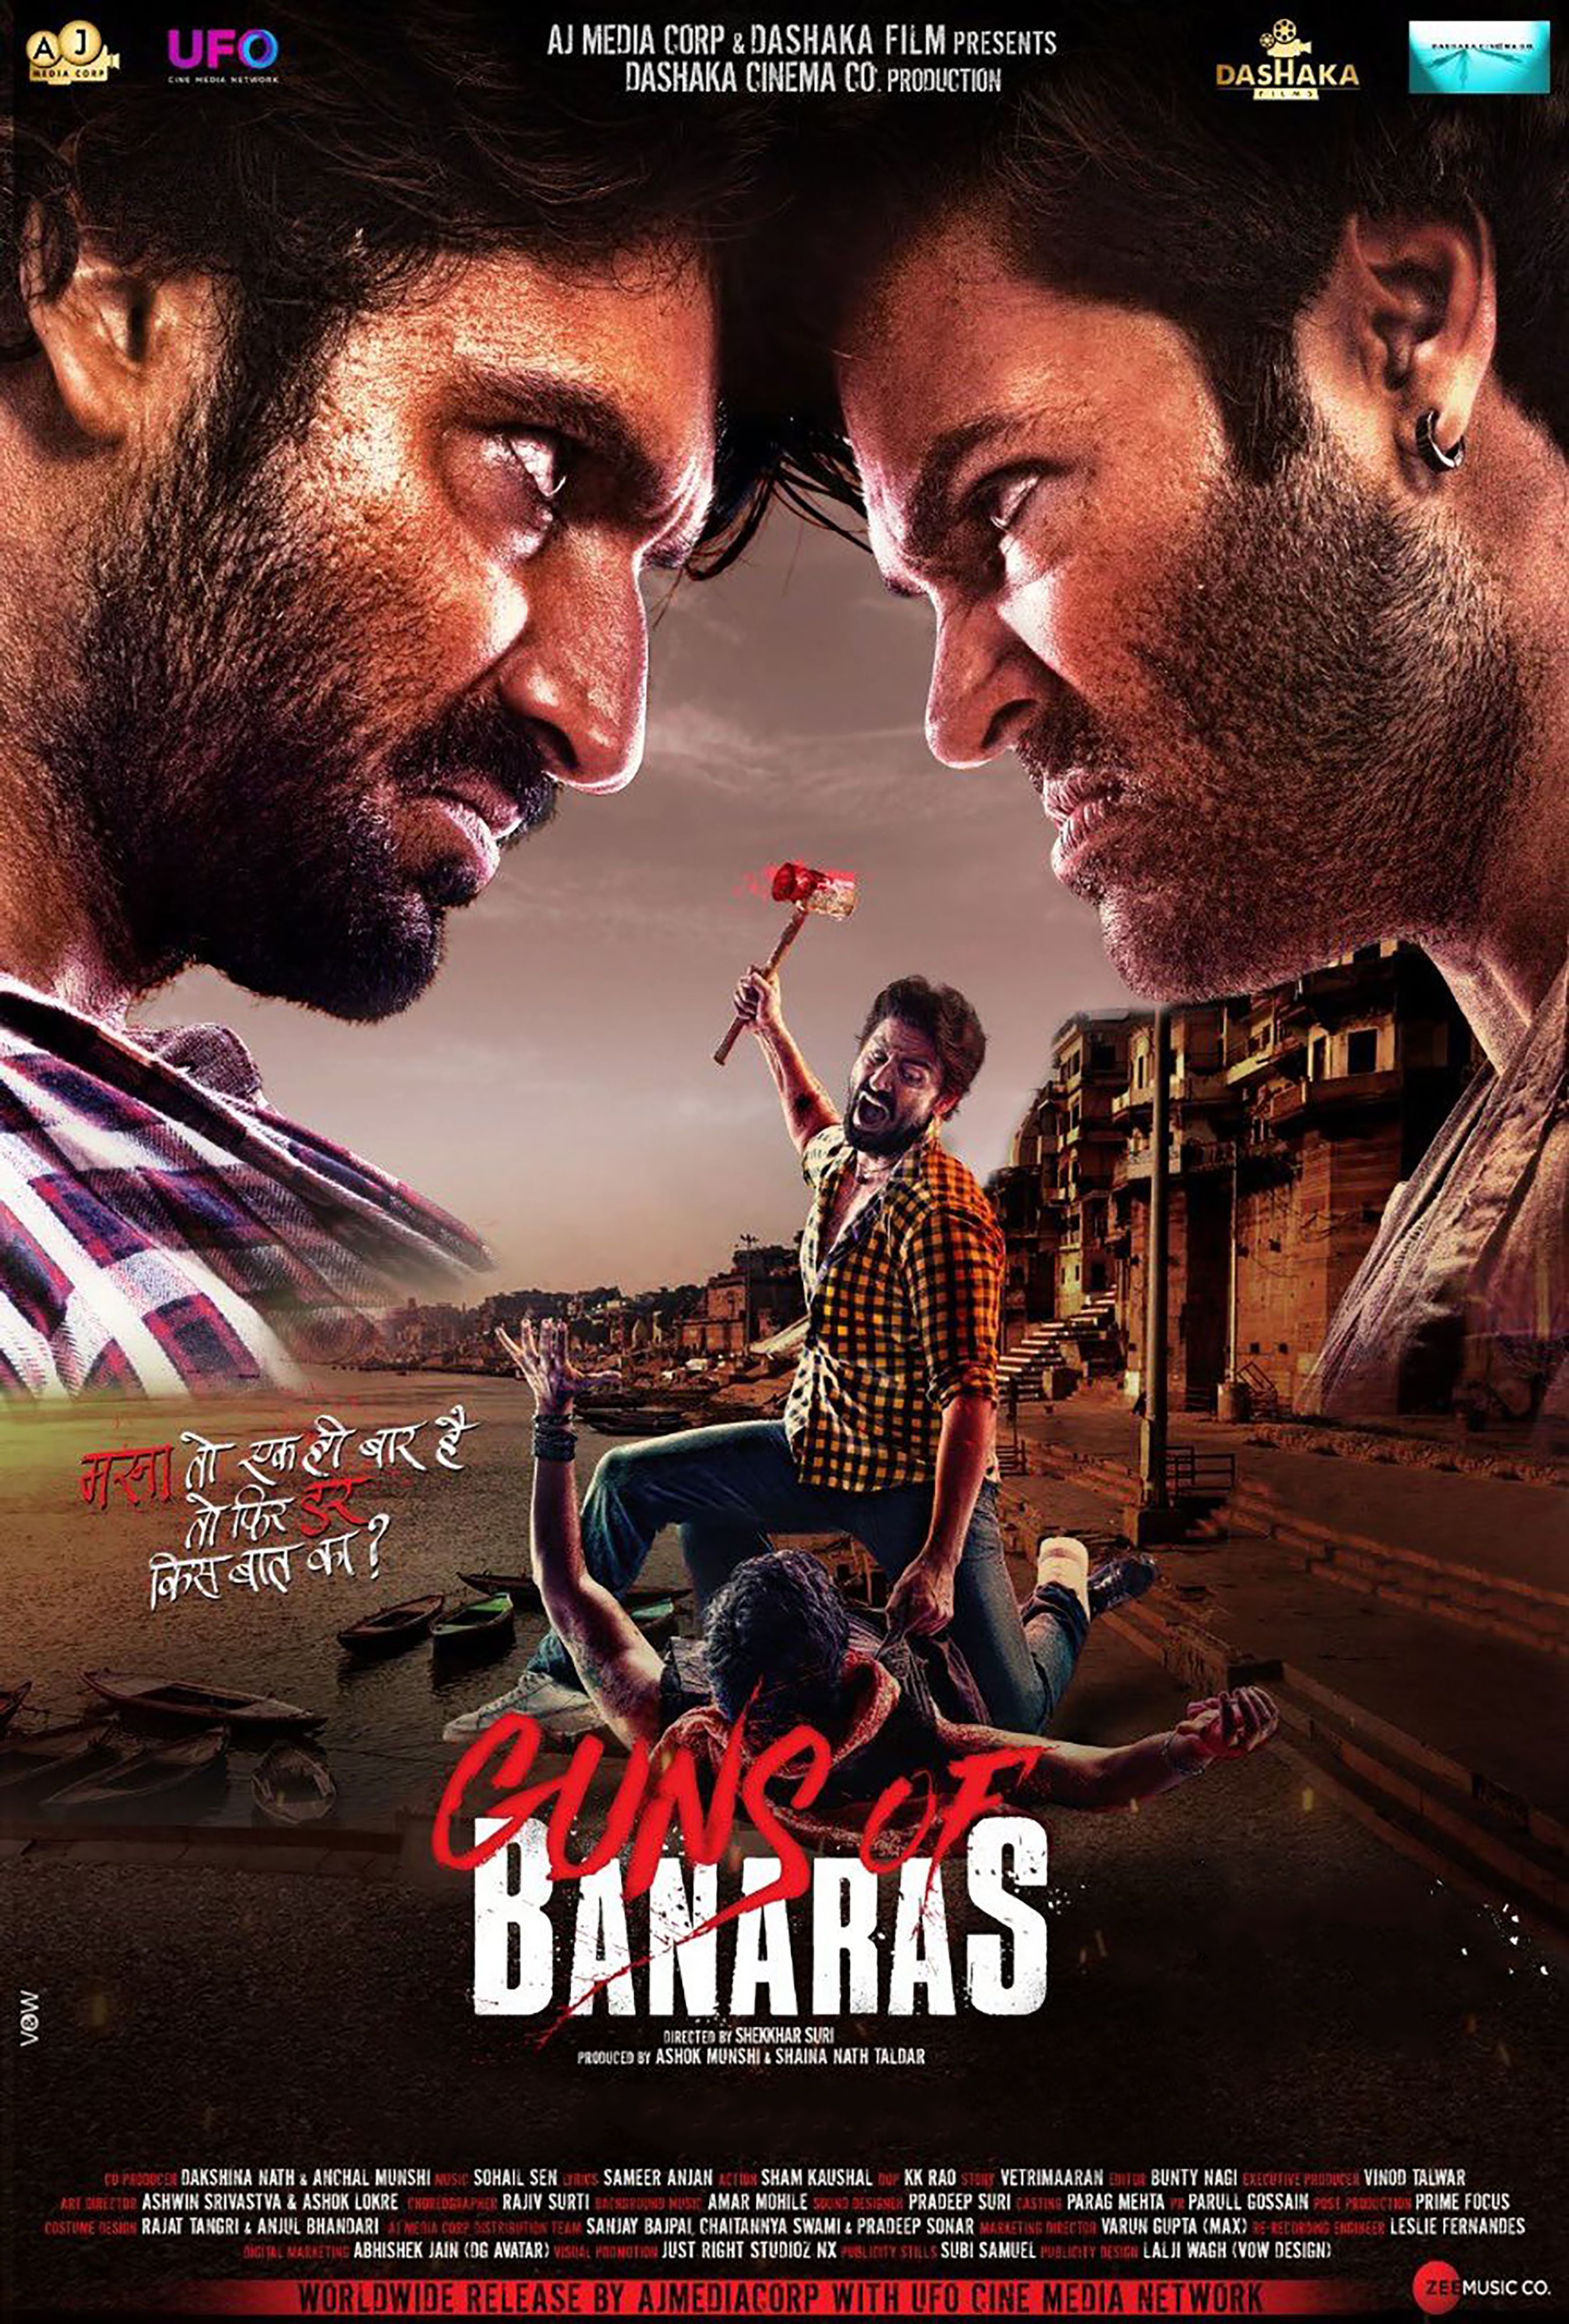 Roadside Romeo Full Movie In Hindi Hd Download